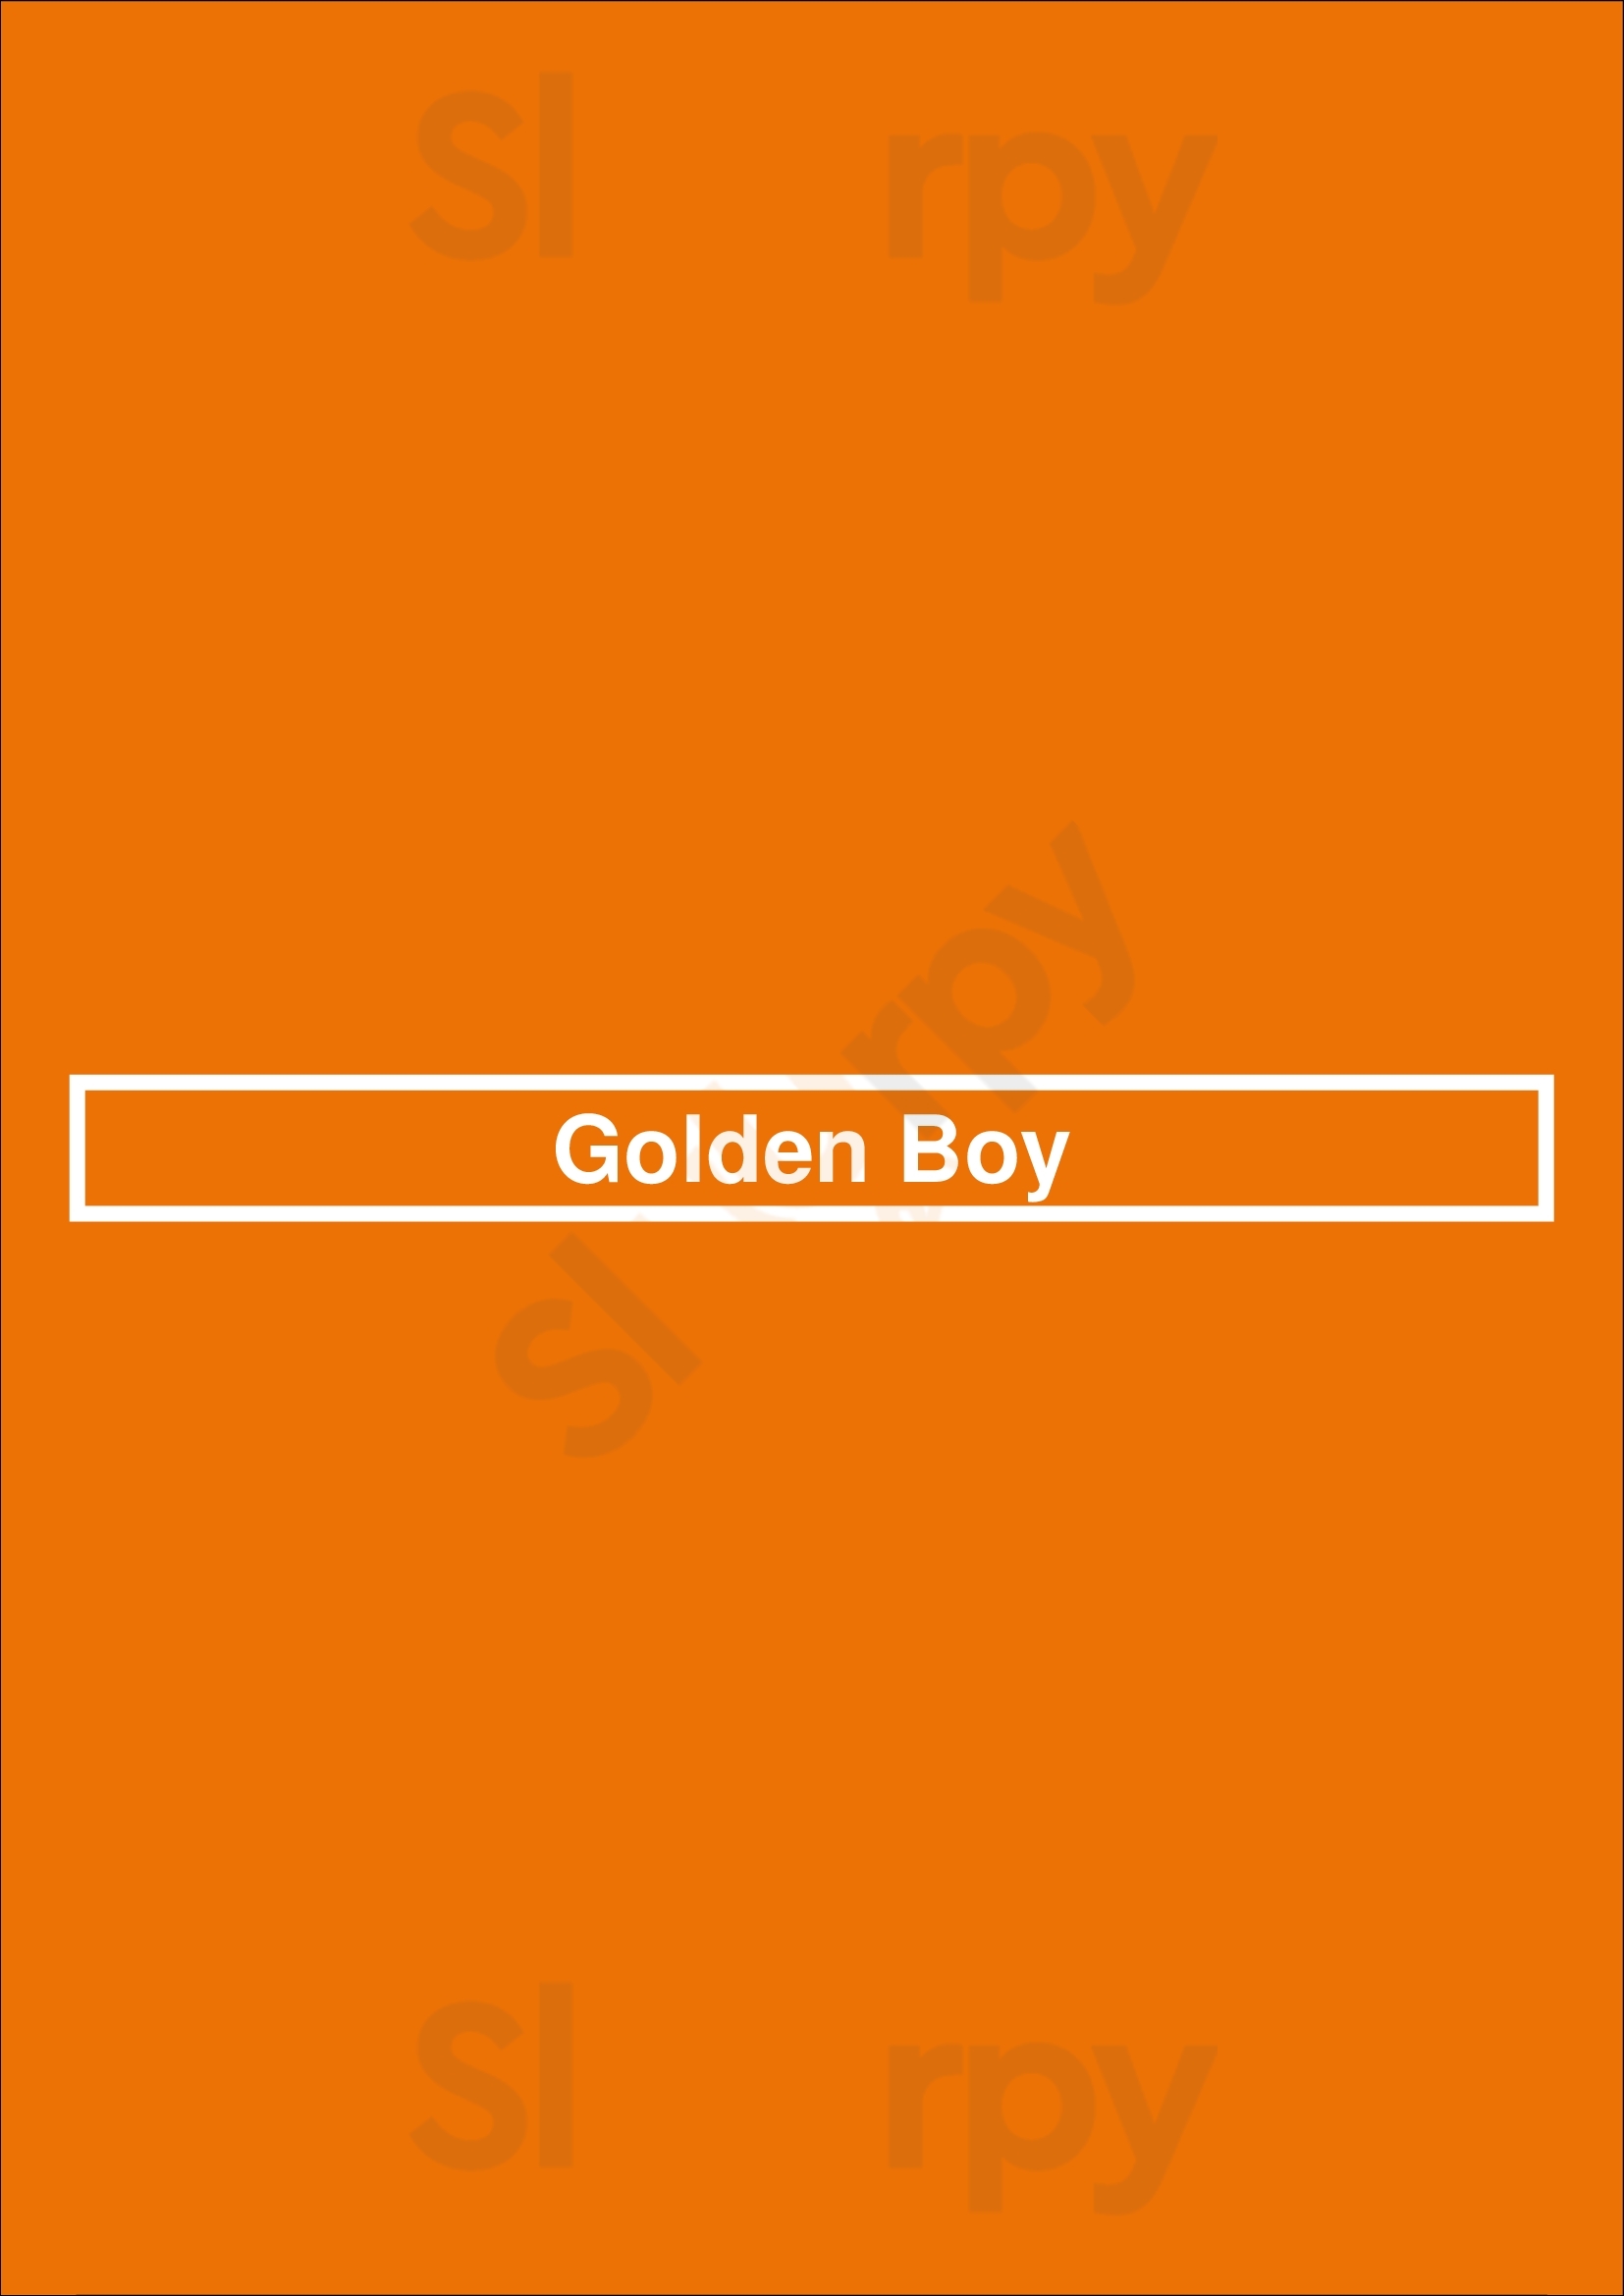 Golden Boy Adelaide Menu - 1